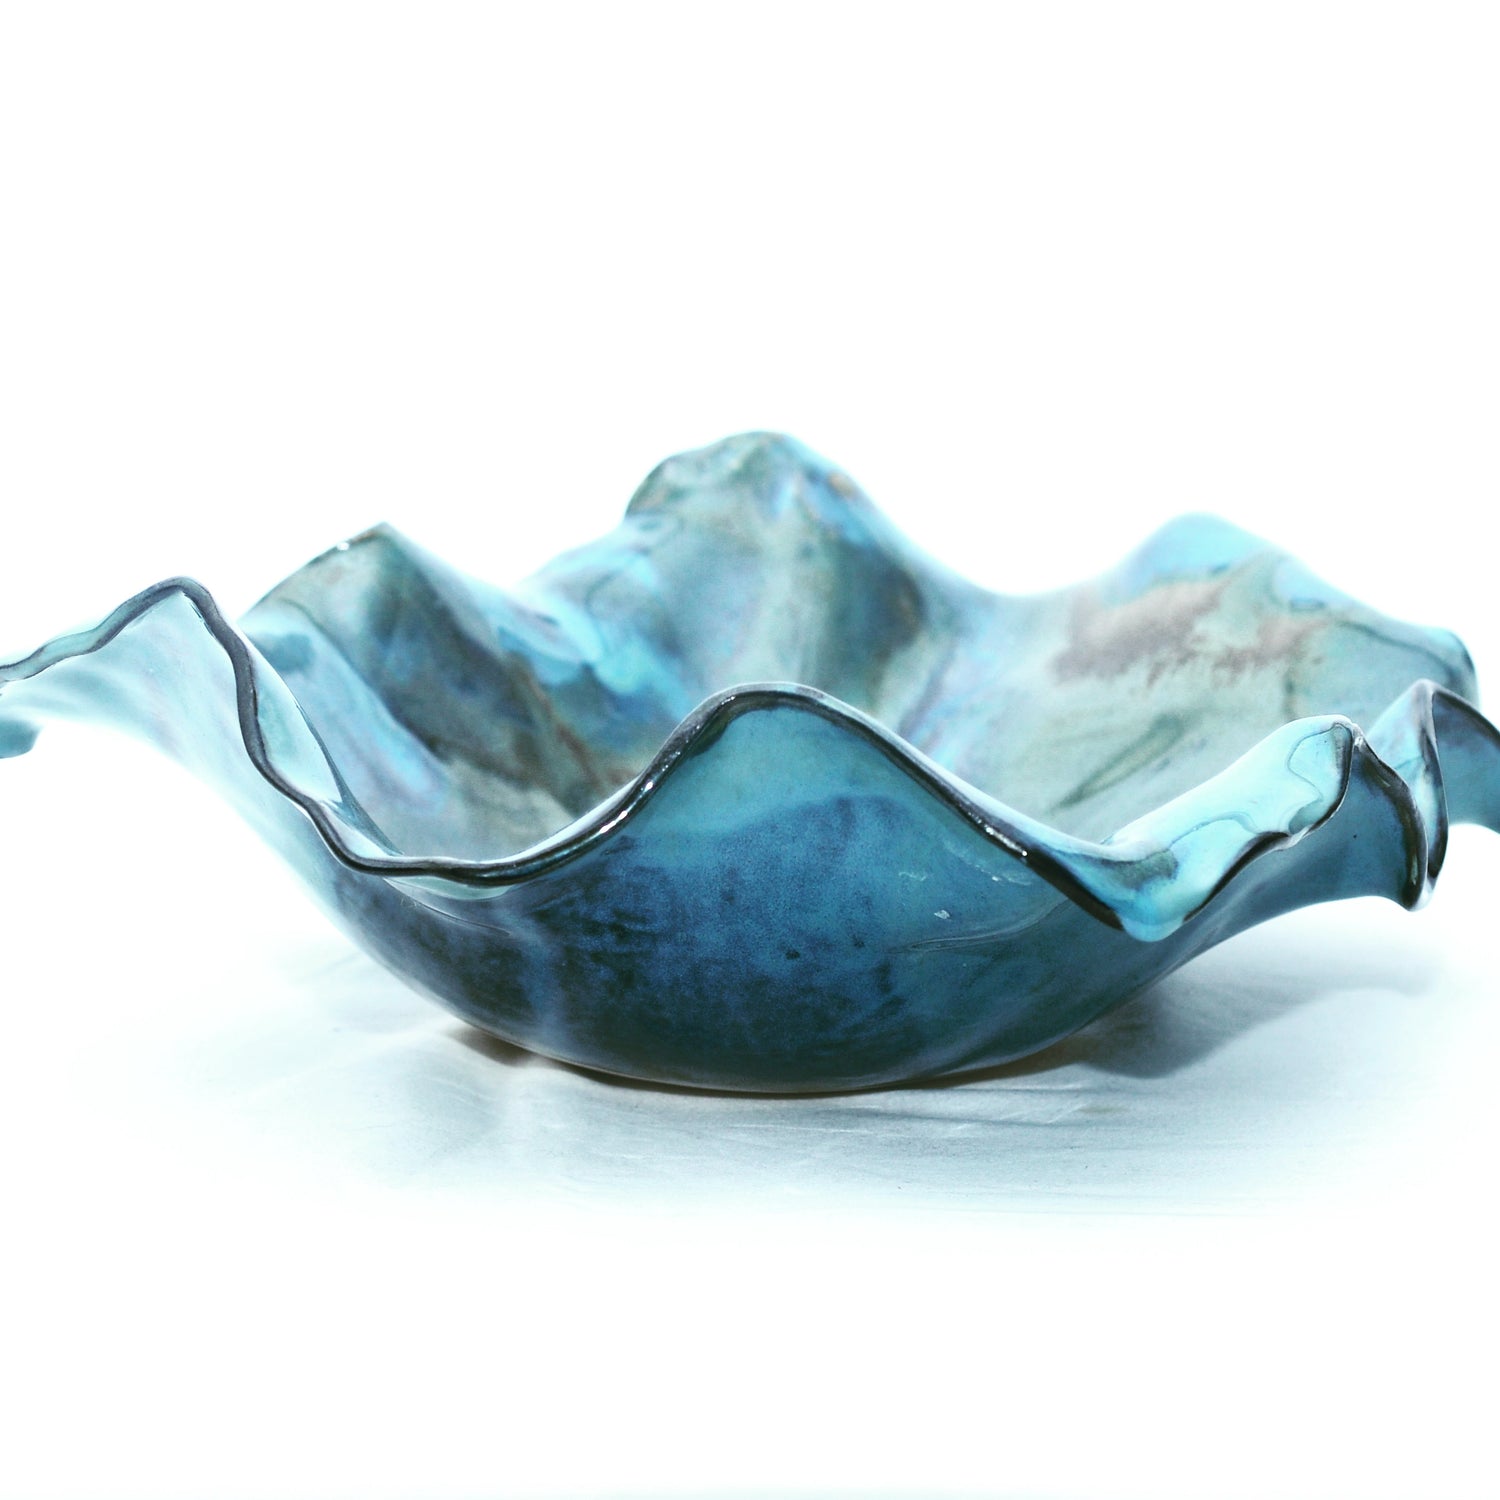 Katie Manekshaw Ceramic Sculpture Mollusk and Stone